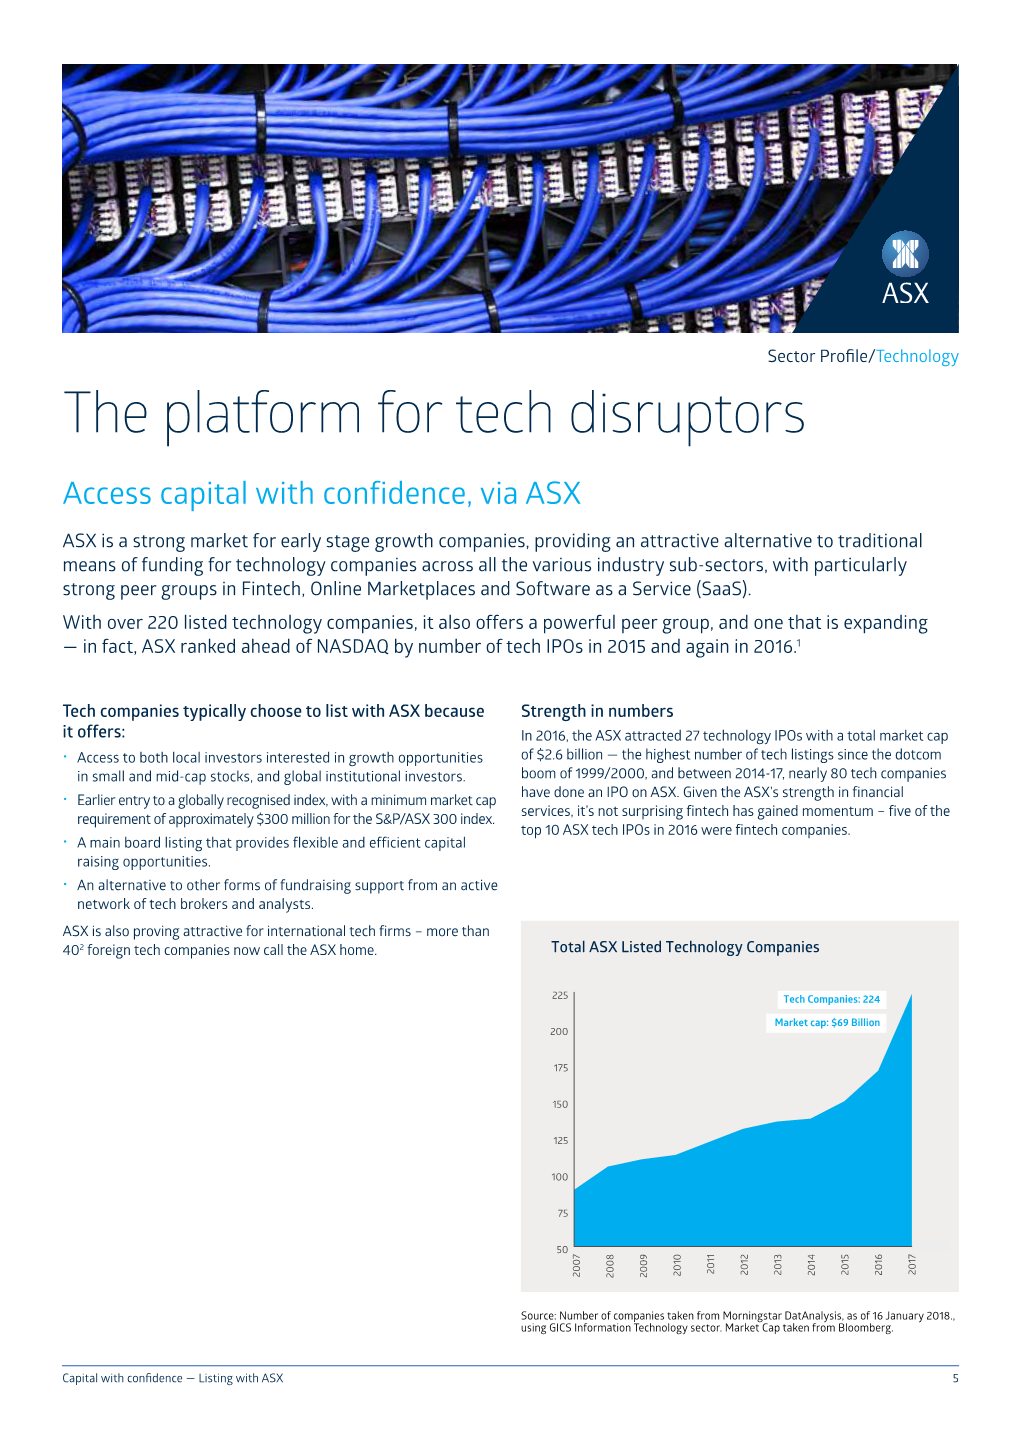 The Platform for Tech Disruptors